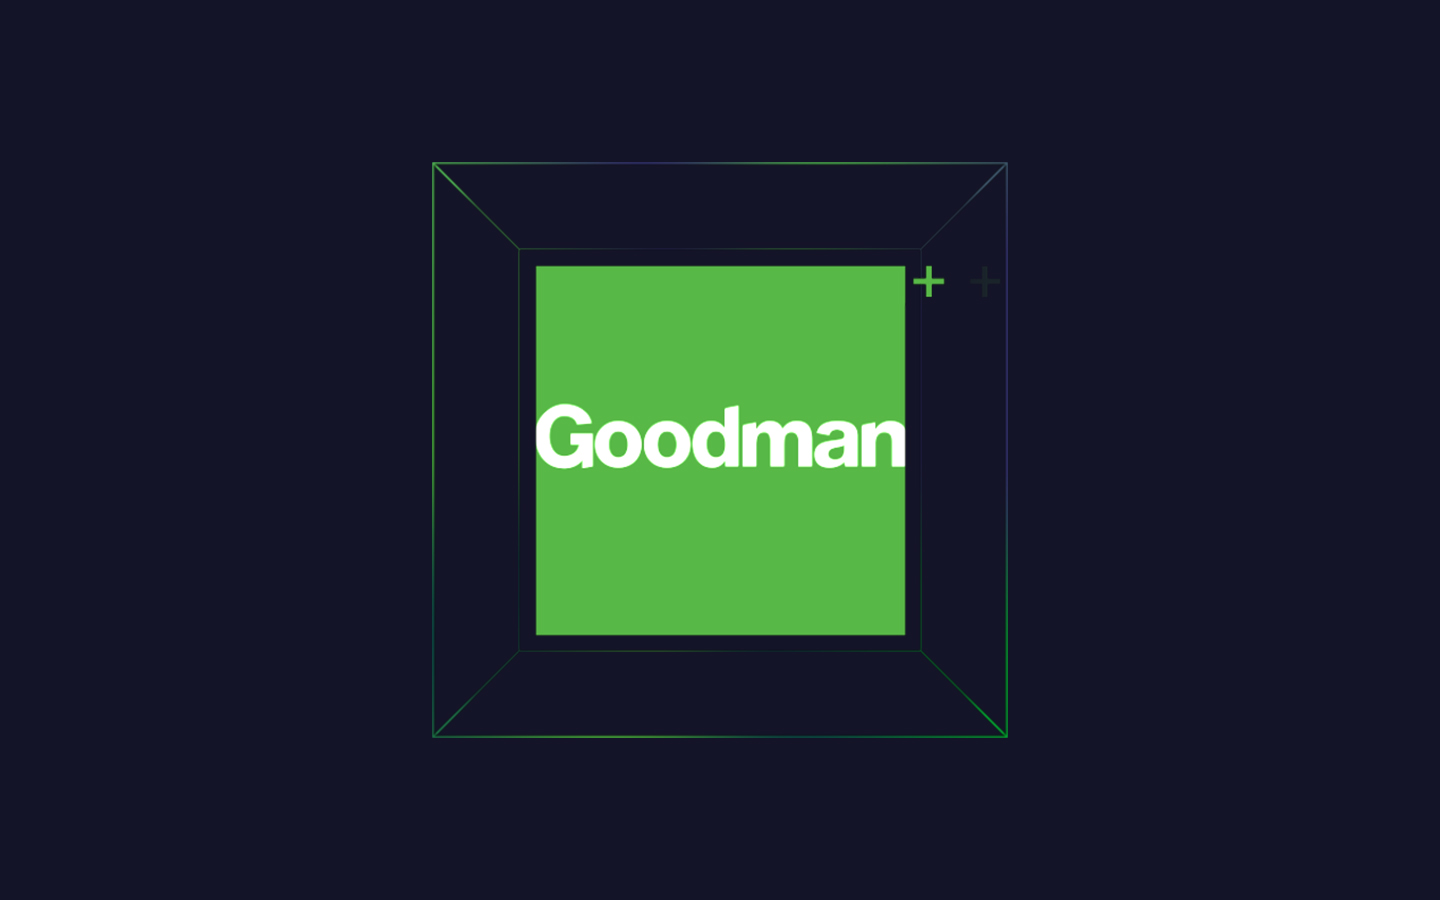 Goodman cube logo.